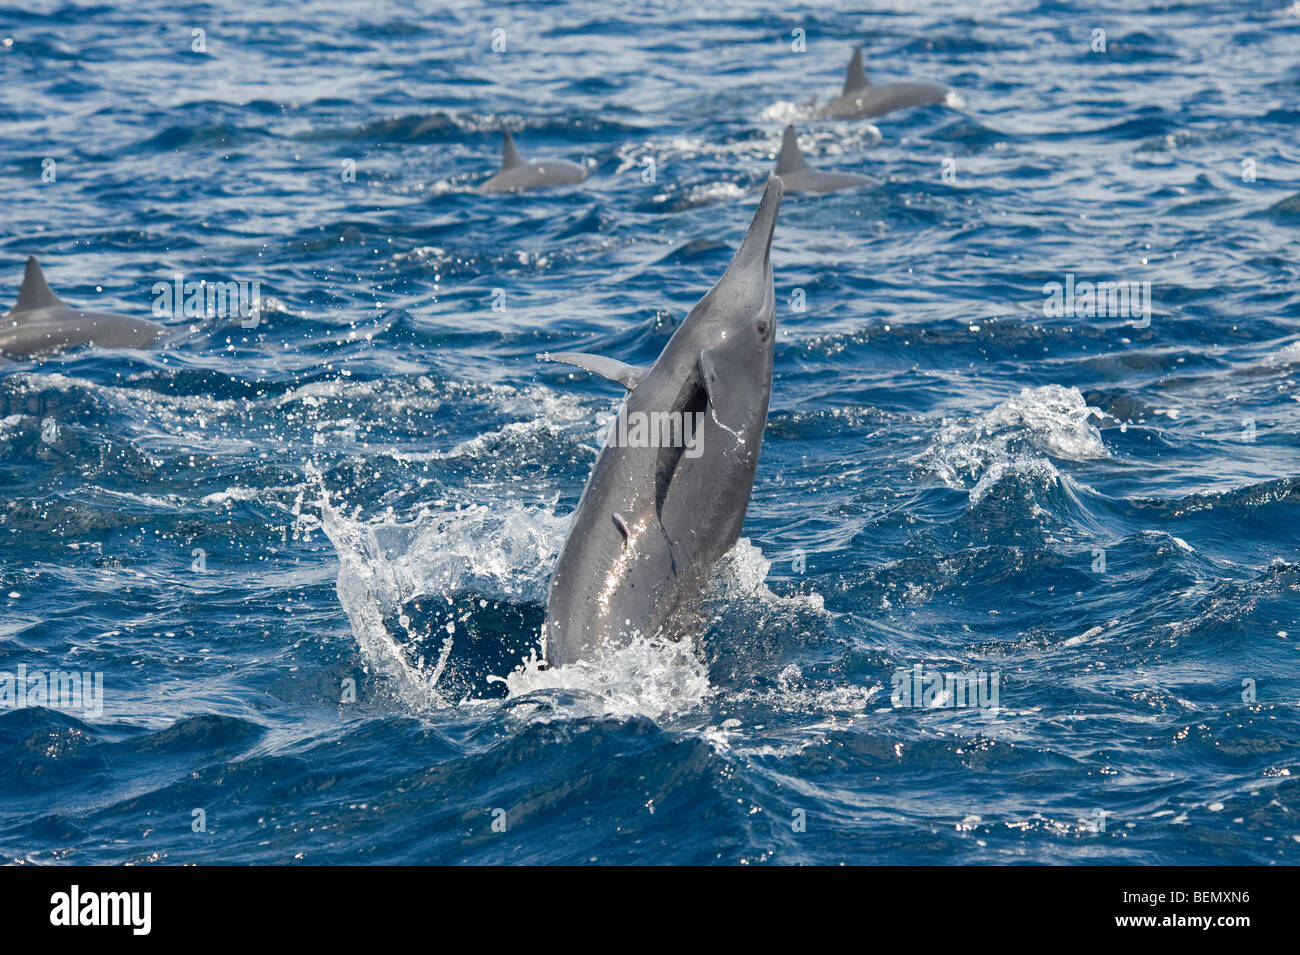 Centroamericano de Delfines Stenella longirostris centroamericana. Costa Rica, el Océano Pacífico. Foto de stock